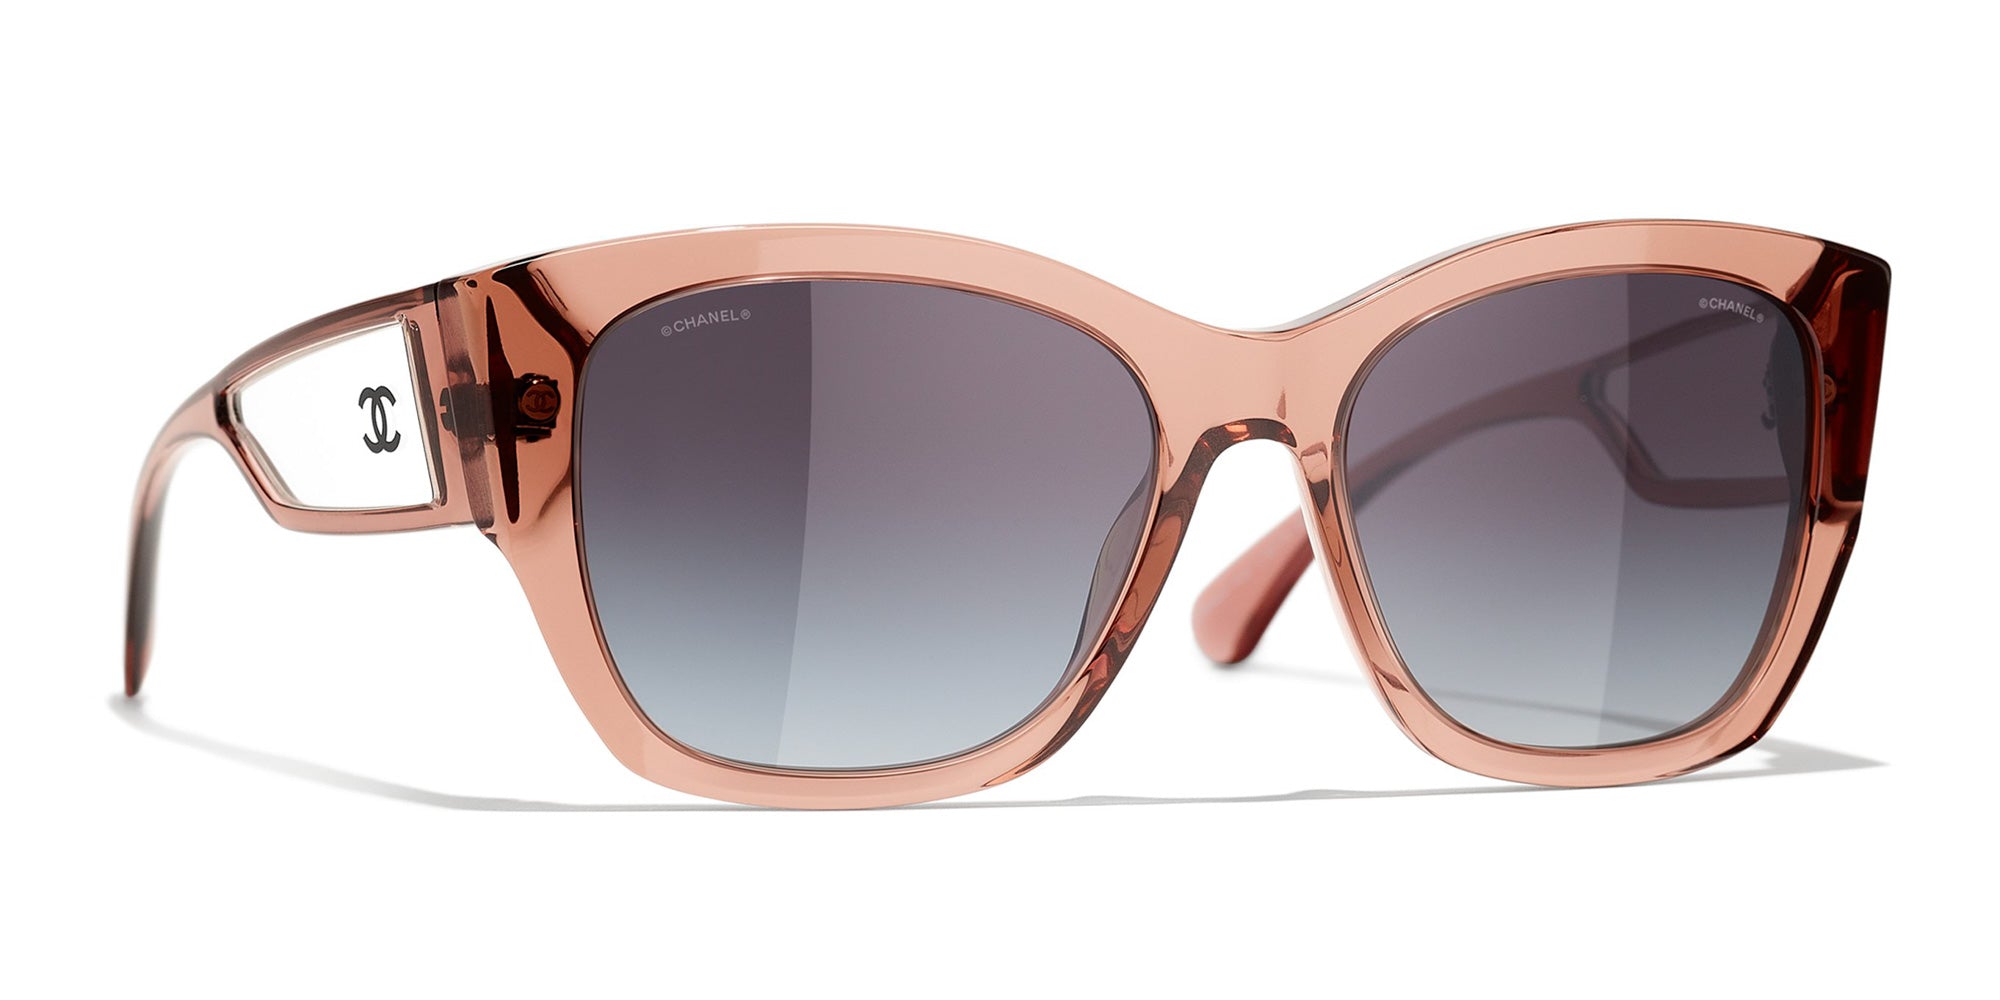 Anna Wintour Sunglasses: A Glimpse into the Icon's Shaded Legacy - Pretavoir